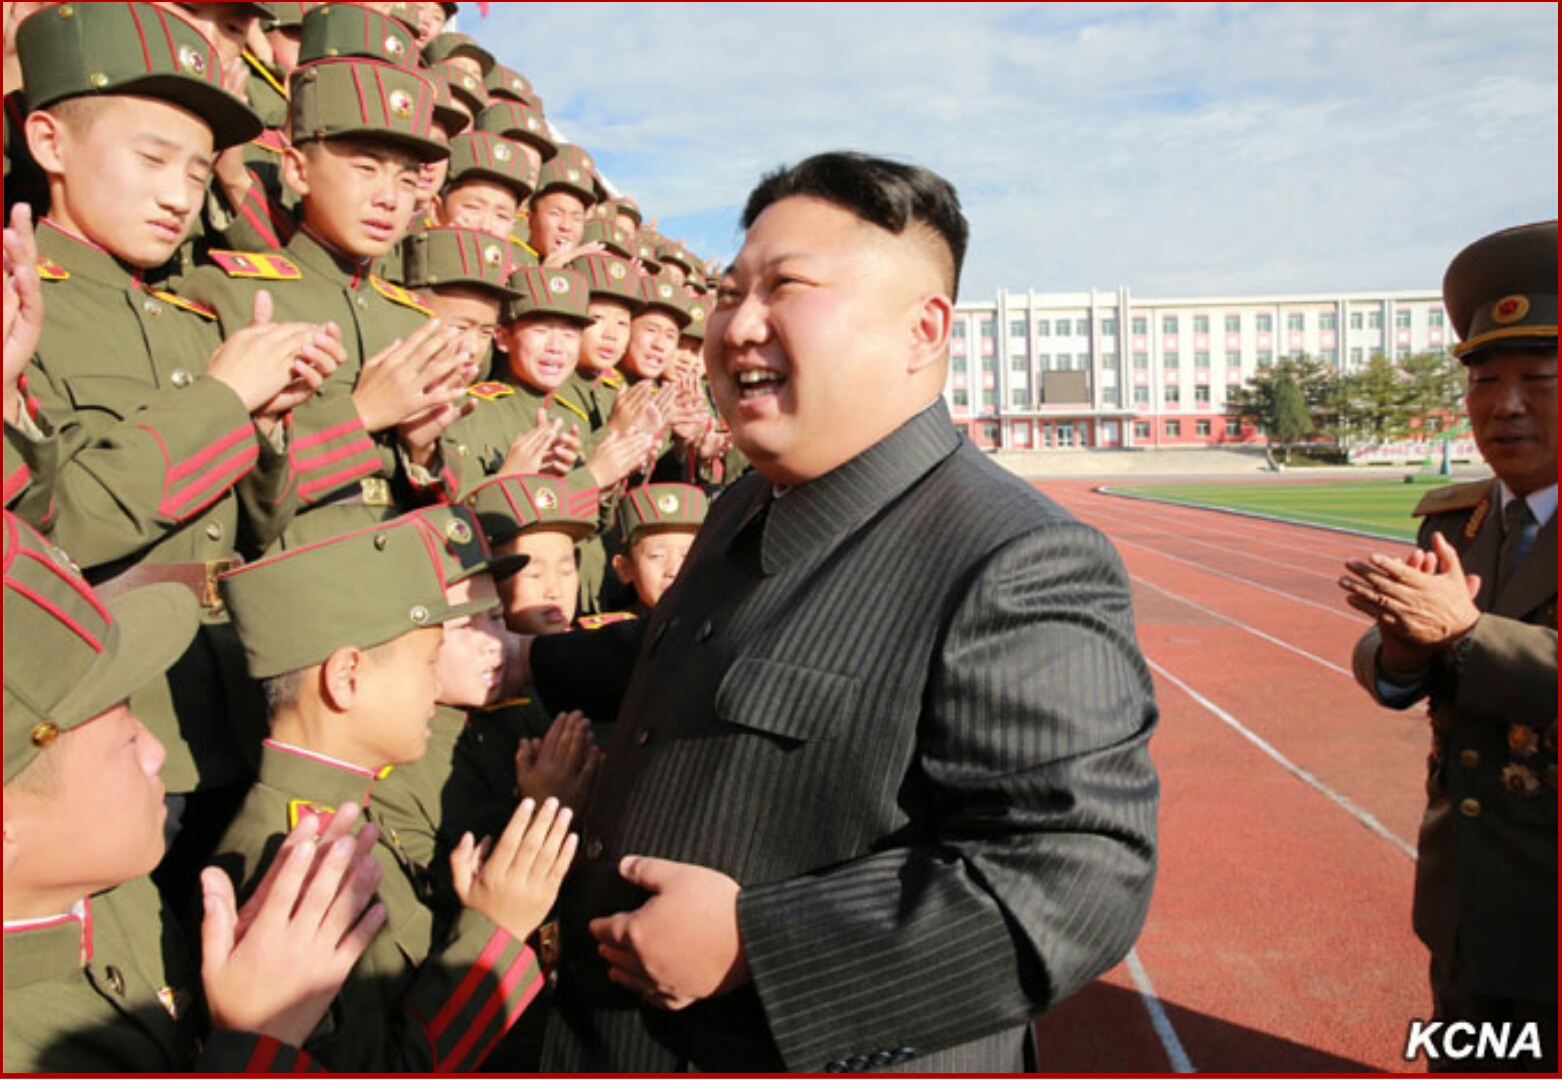 RespectedKim Jong Un Makes Congratulatory Visit to Mangyongdae Revolutionary School - Image